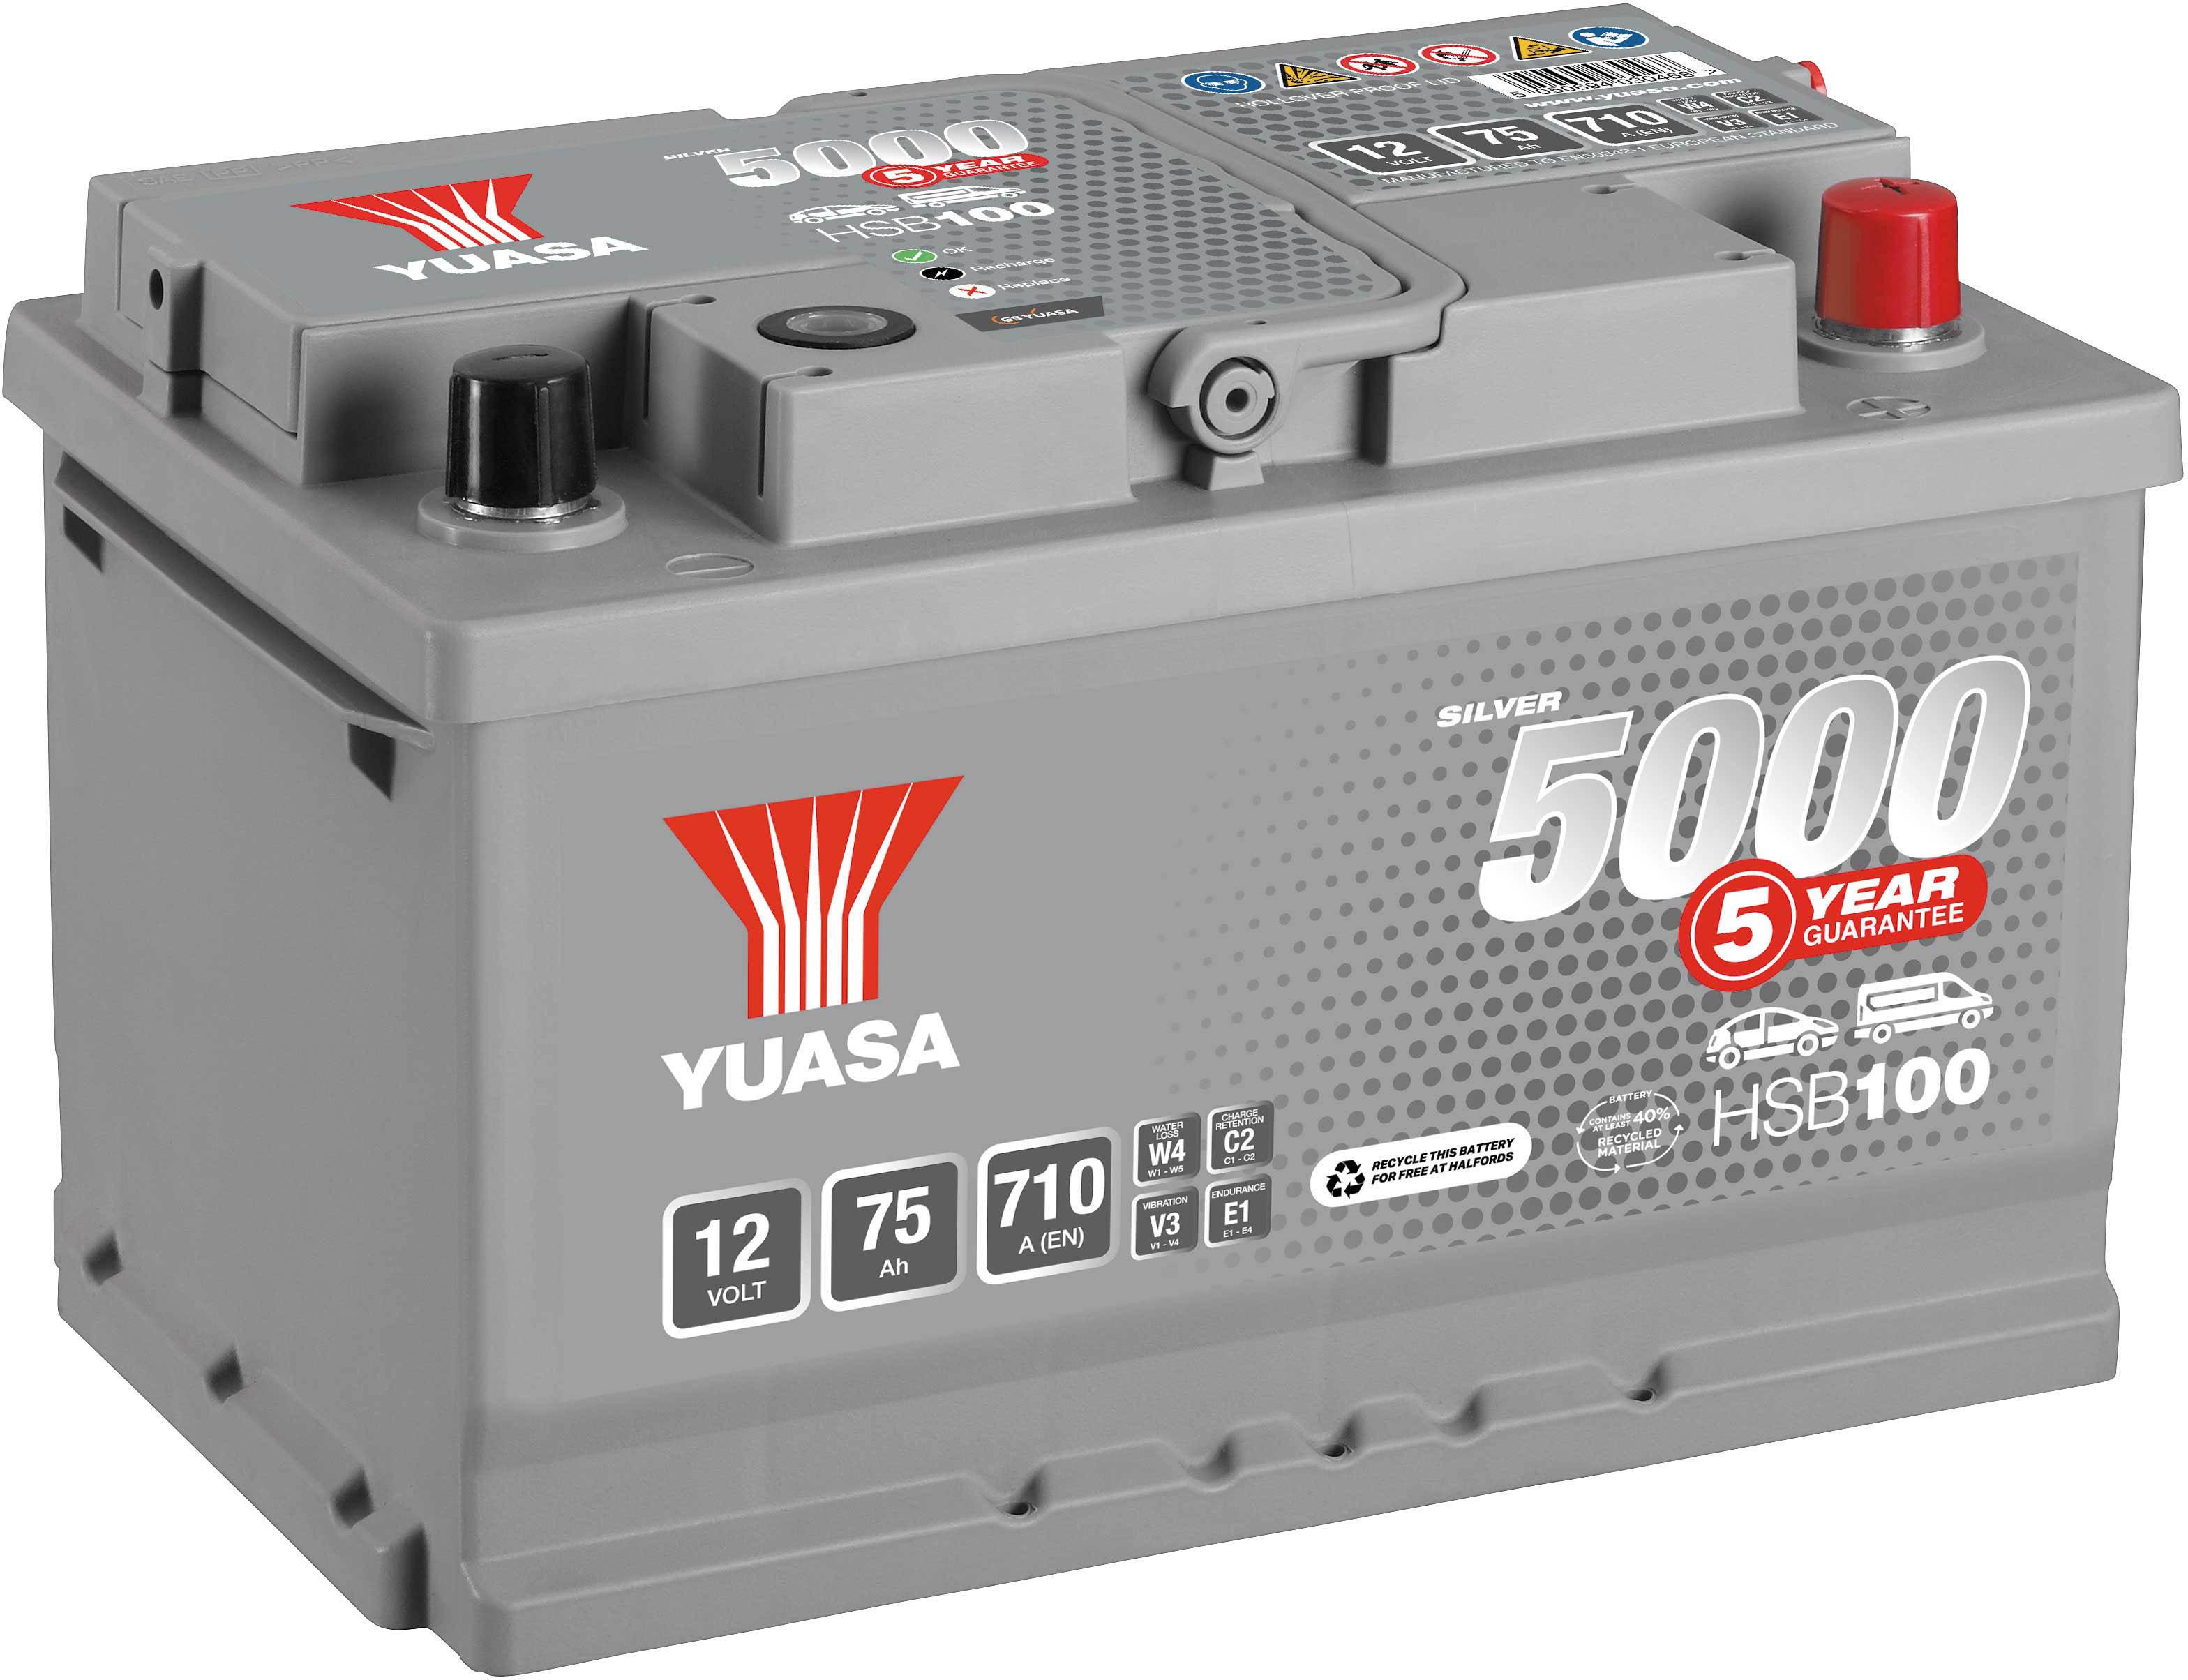 Yuasa Hsb010 Silver 12V Car Battery 5 Year Guarantee